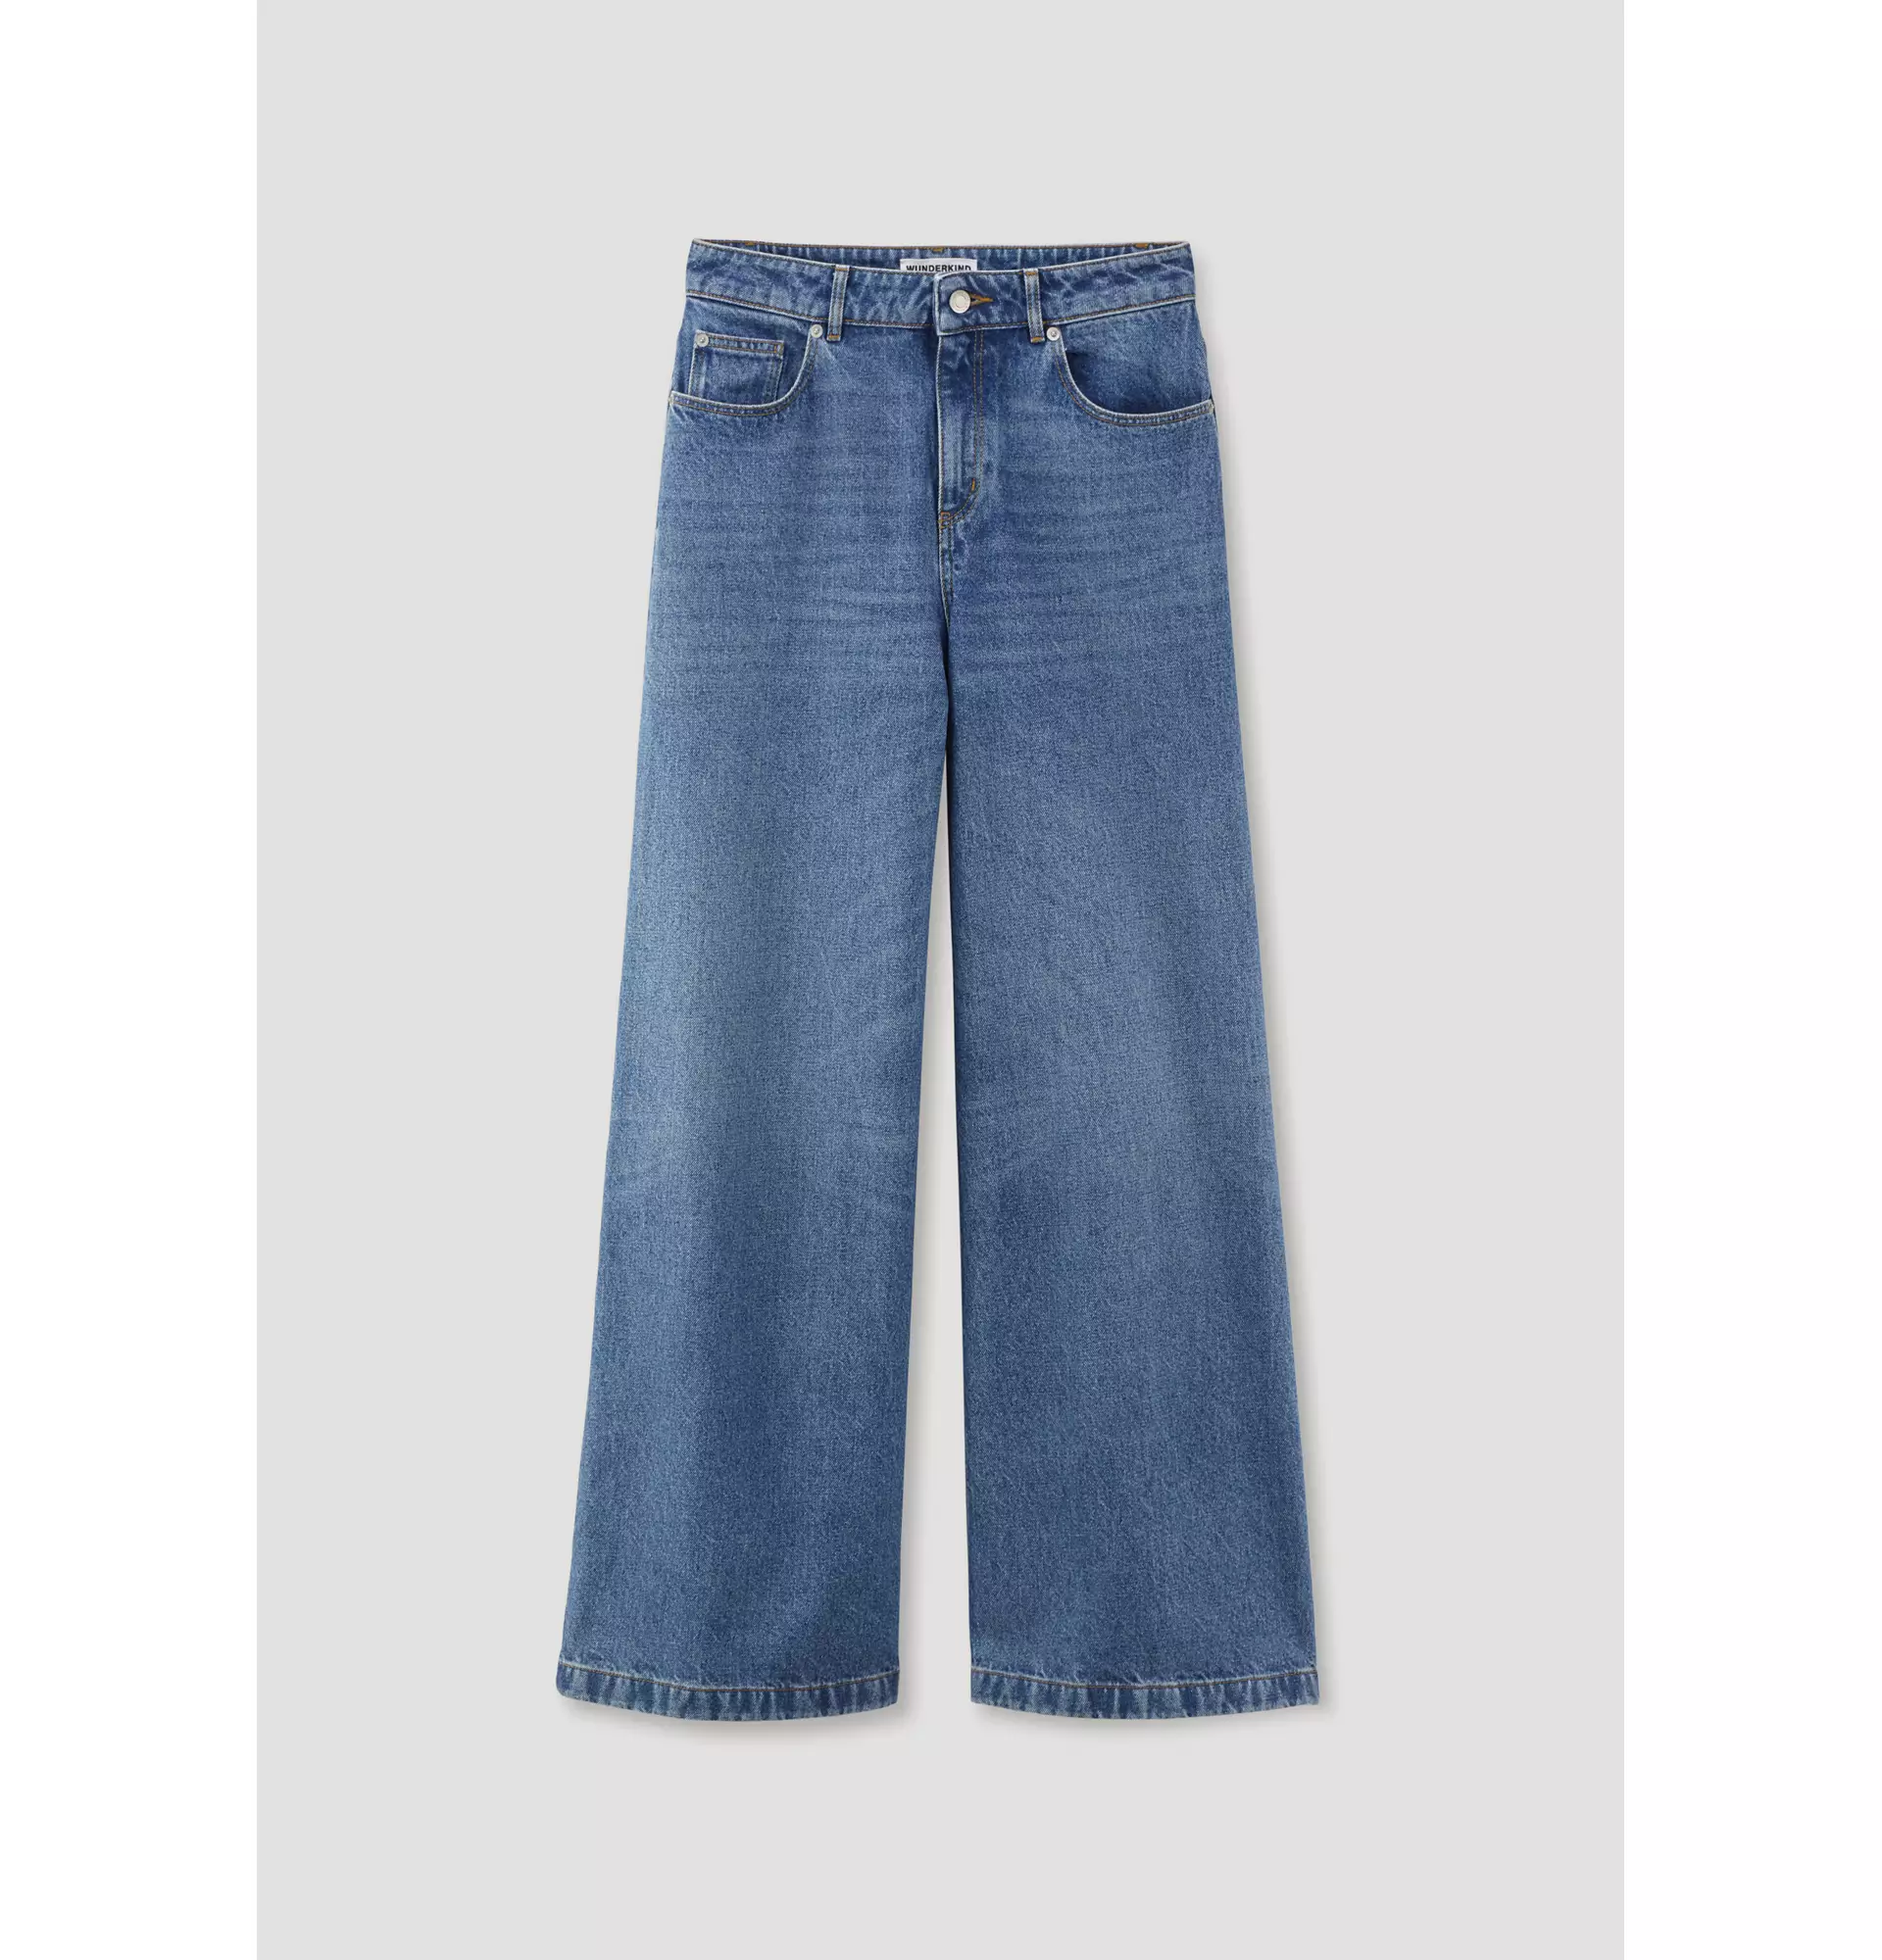 WUNDERKIND X HESSNATUR jeans high rise flared made of pure organic denim - 4